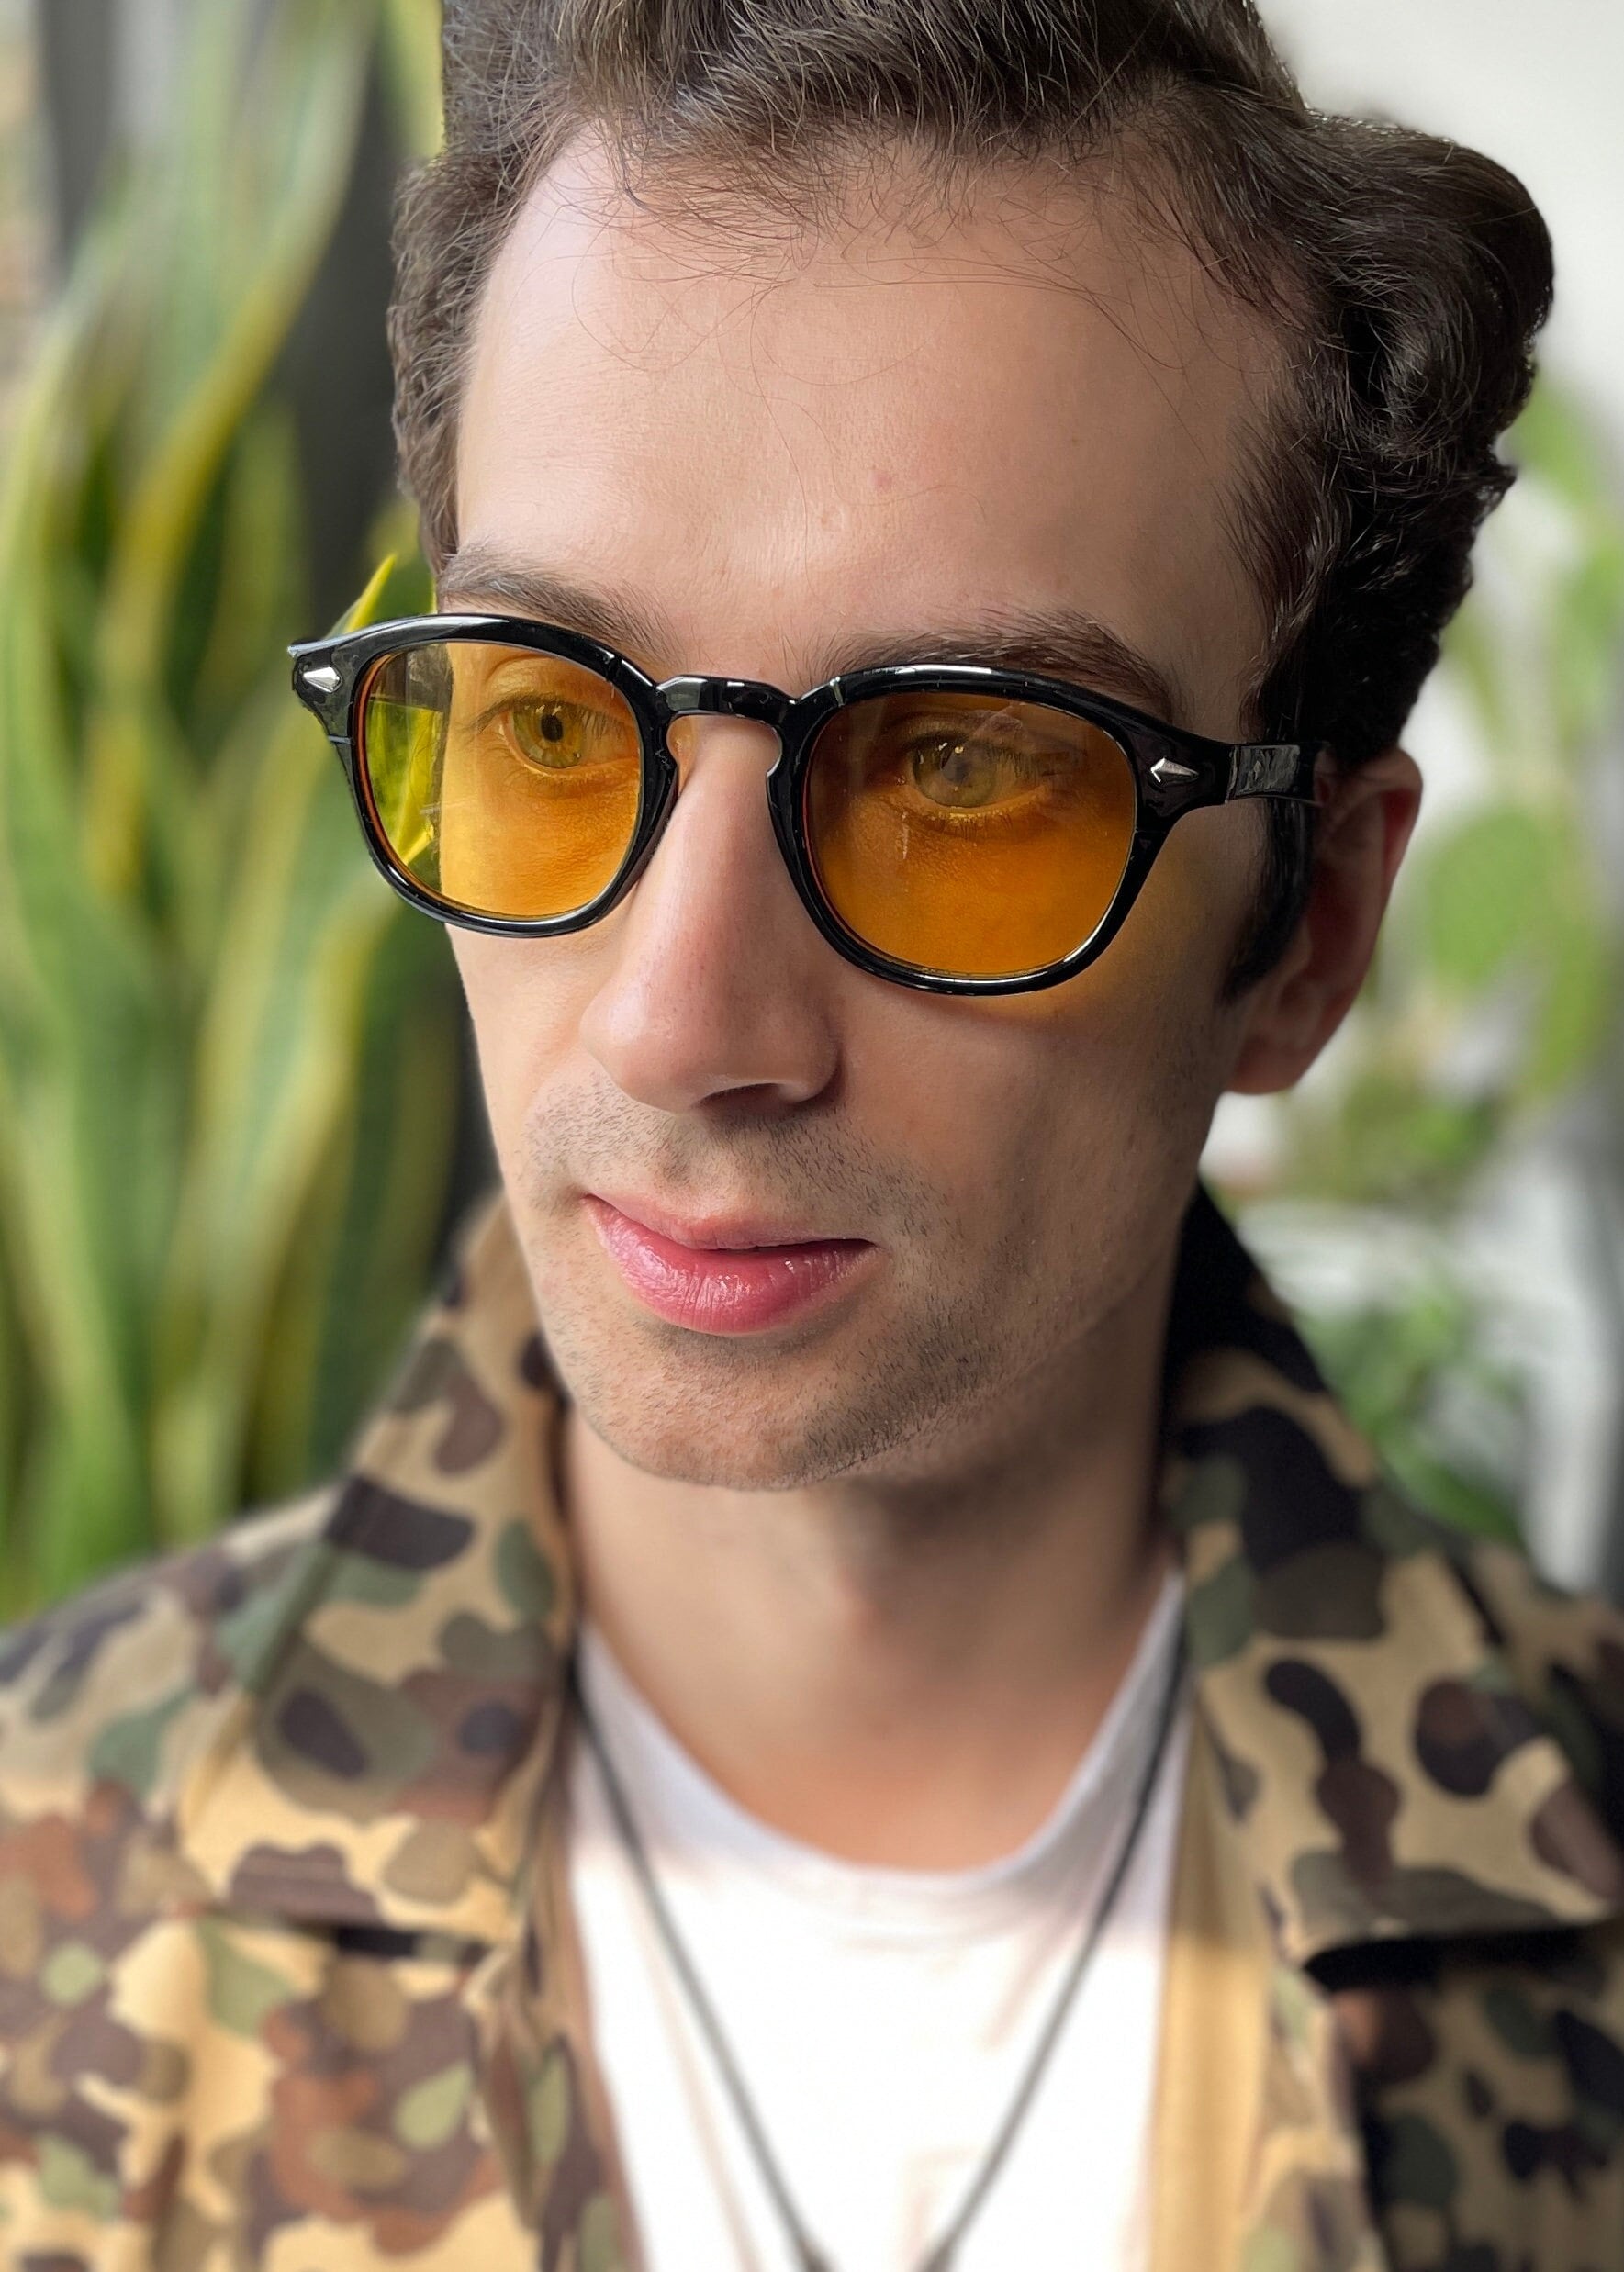 UNISEX Retro Round Square Sunglasses Black Frame and Yellow Lenses